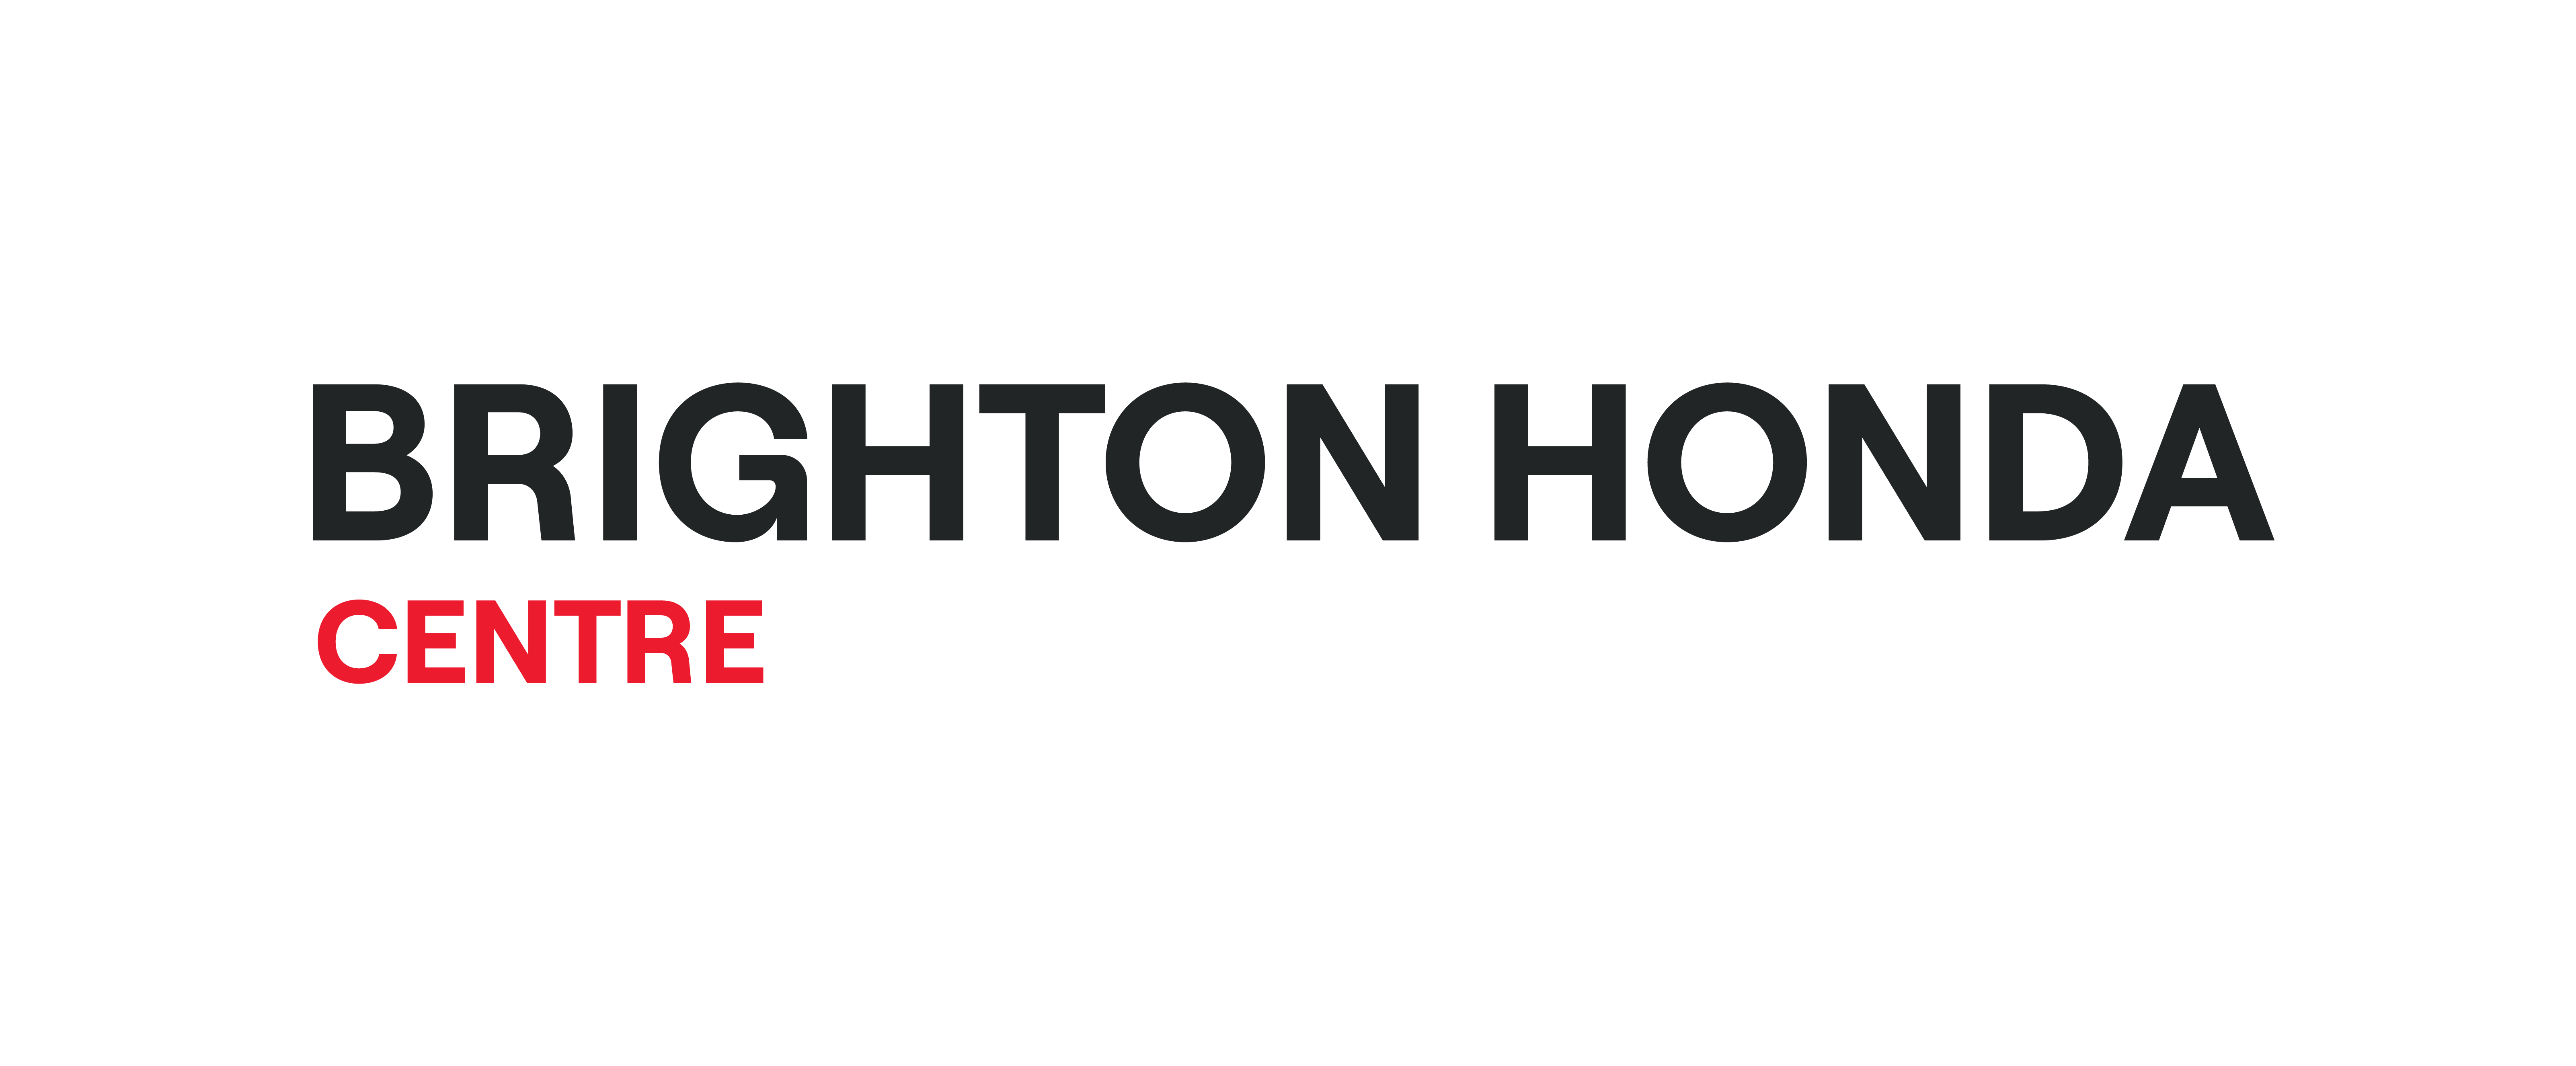 Brighton Honda Centre-white-black-red copy.png